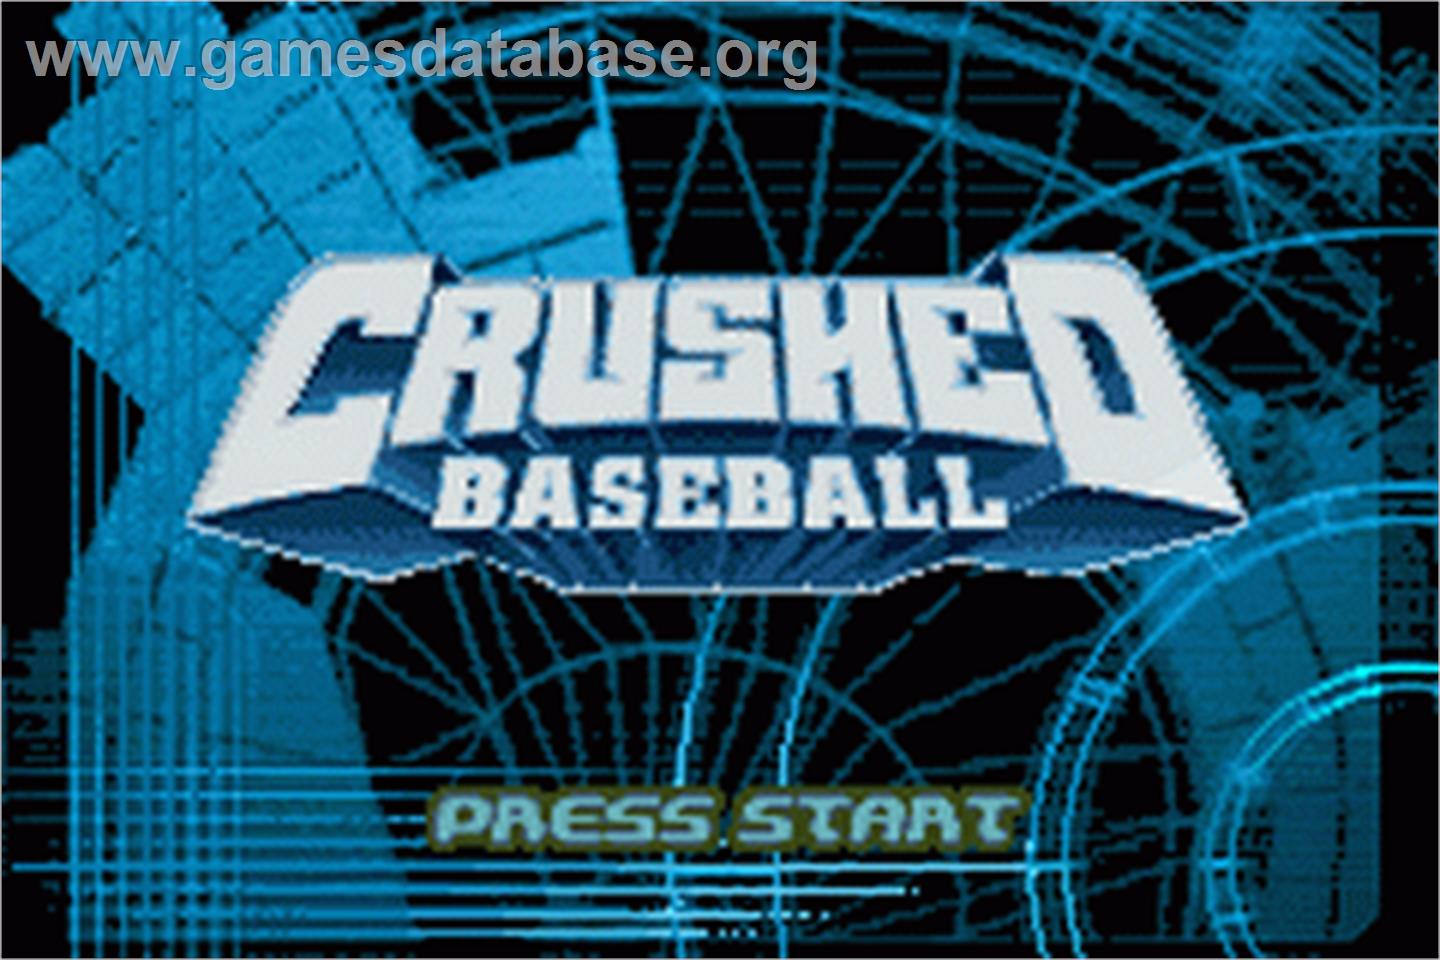 Crushed Baseball - Nintendo Game Boy Advance - Artwork - Title Screen